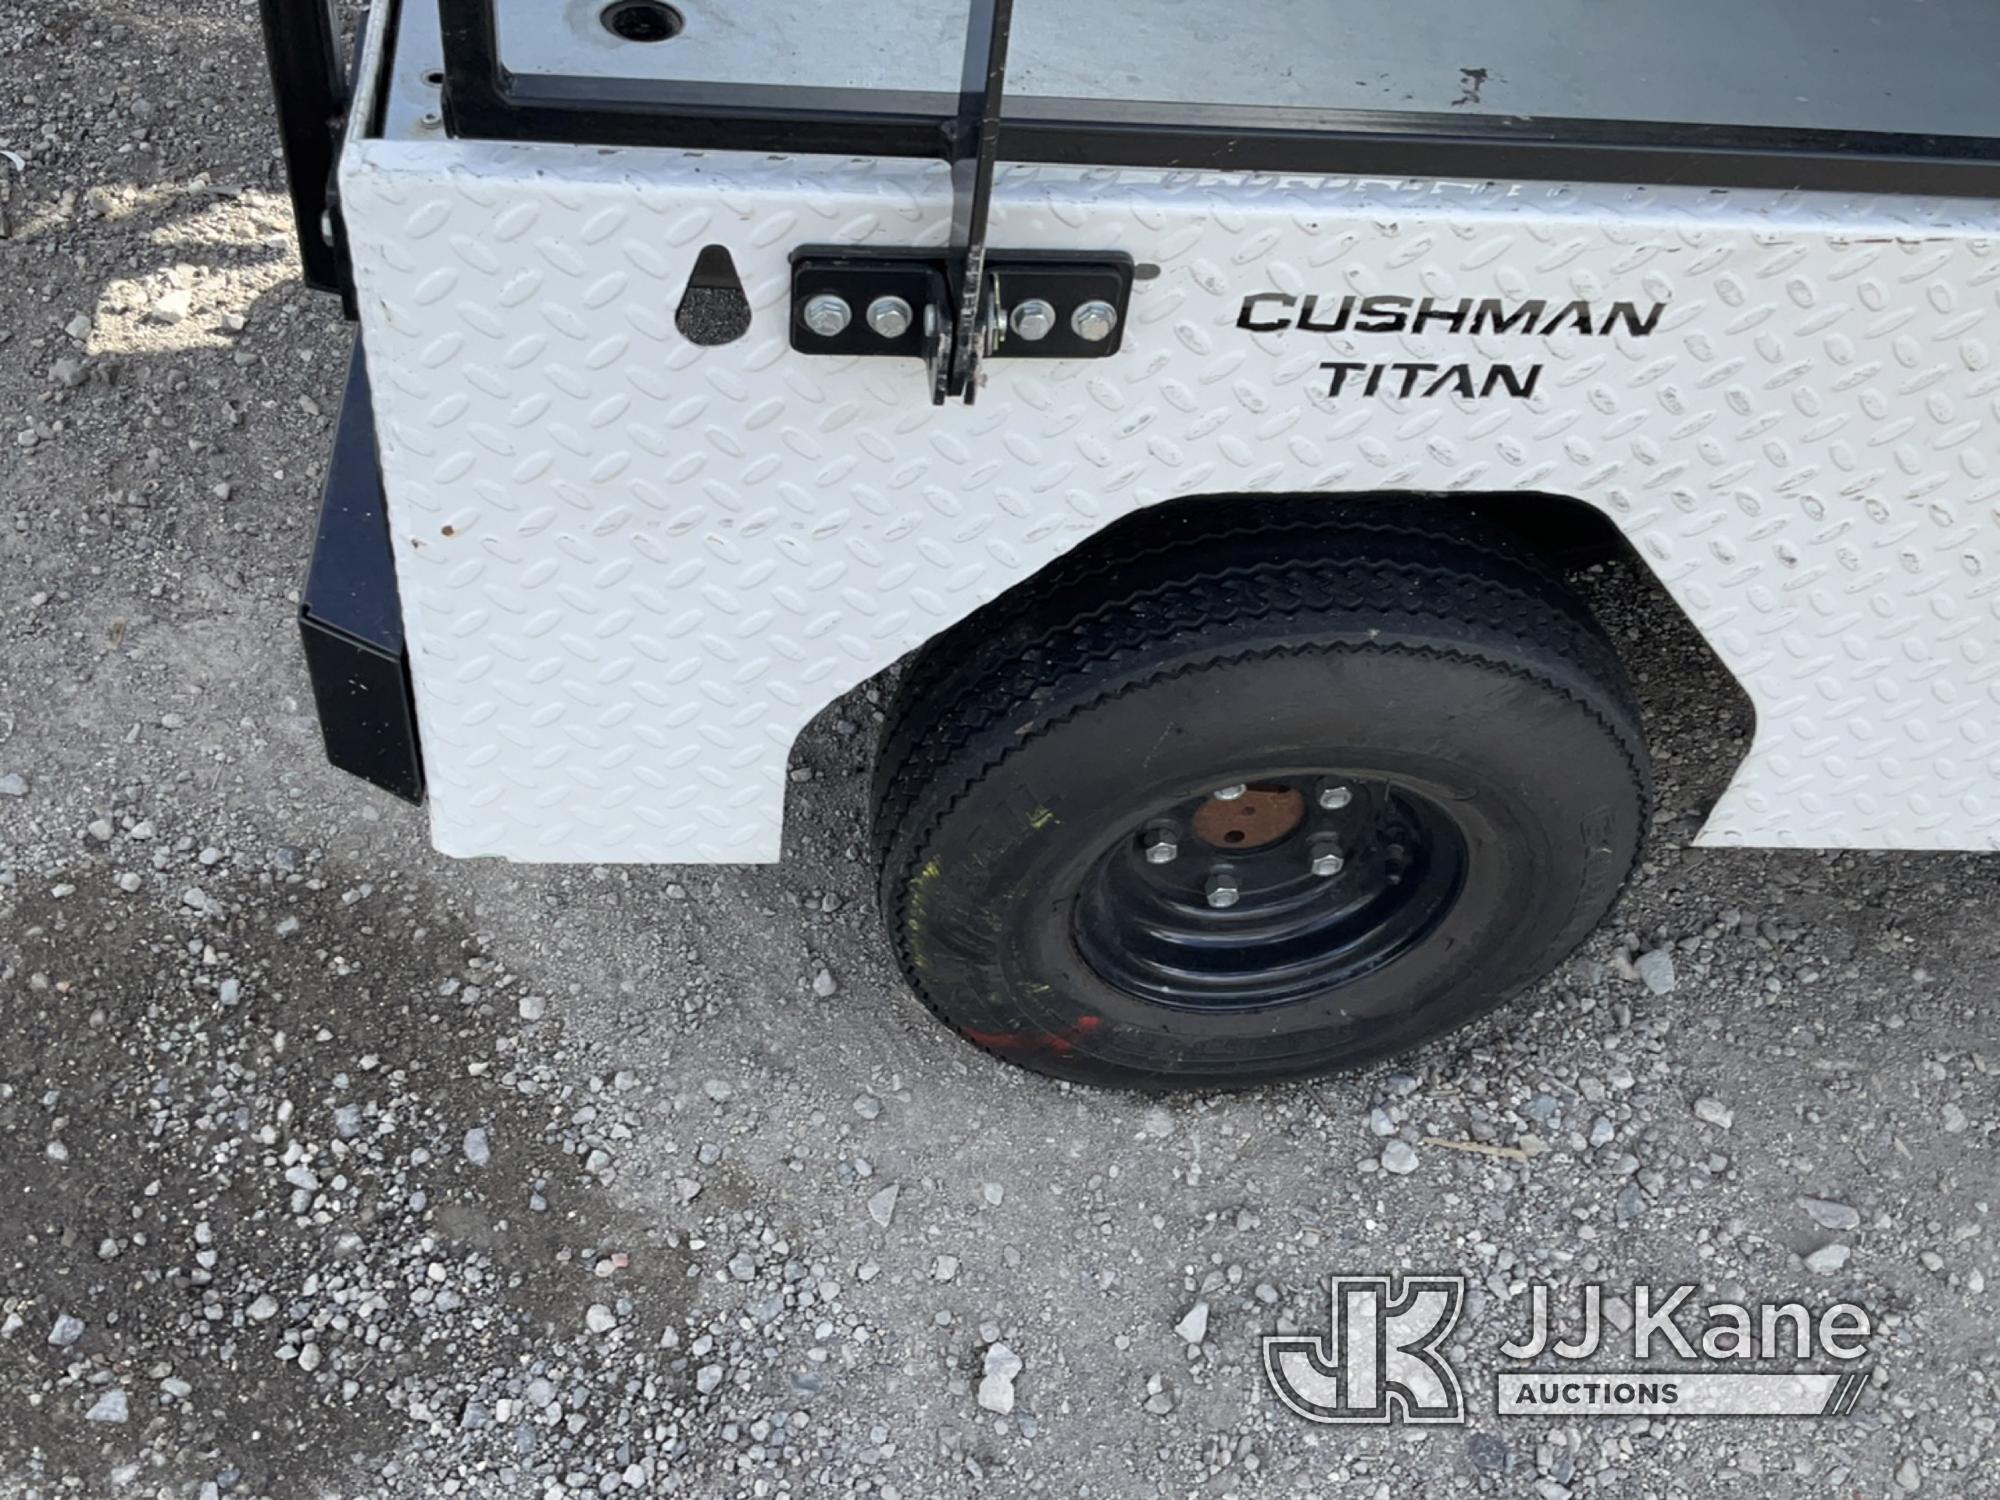 (Jurupa Valley, CA) 2015 Cushman Titan Golf Cart Not Running , No key, Missing Parts